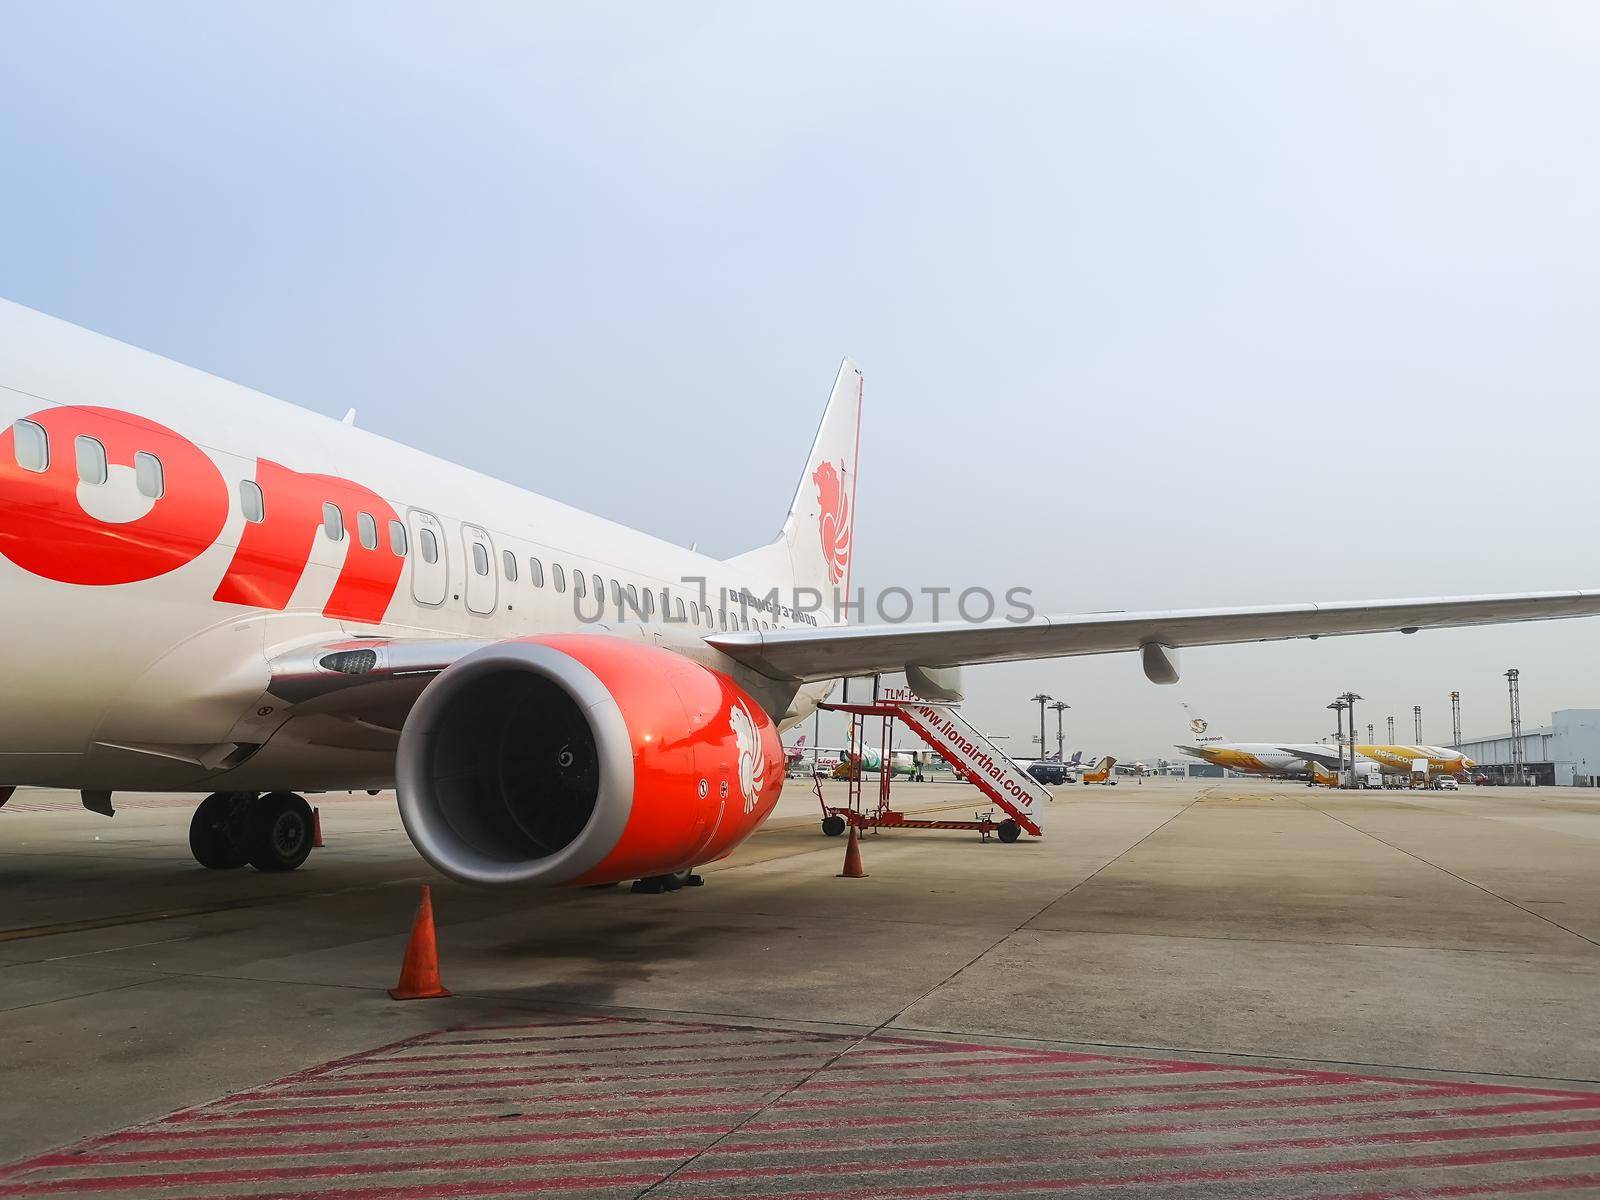 02 OCTOBER 2019, Lion air flying from chiang rai to bangkok in Thailand